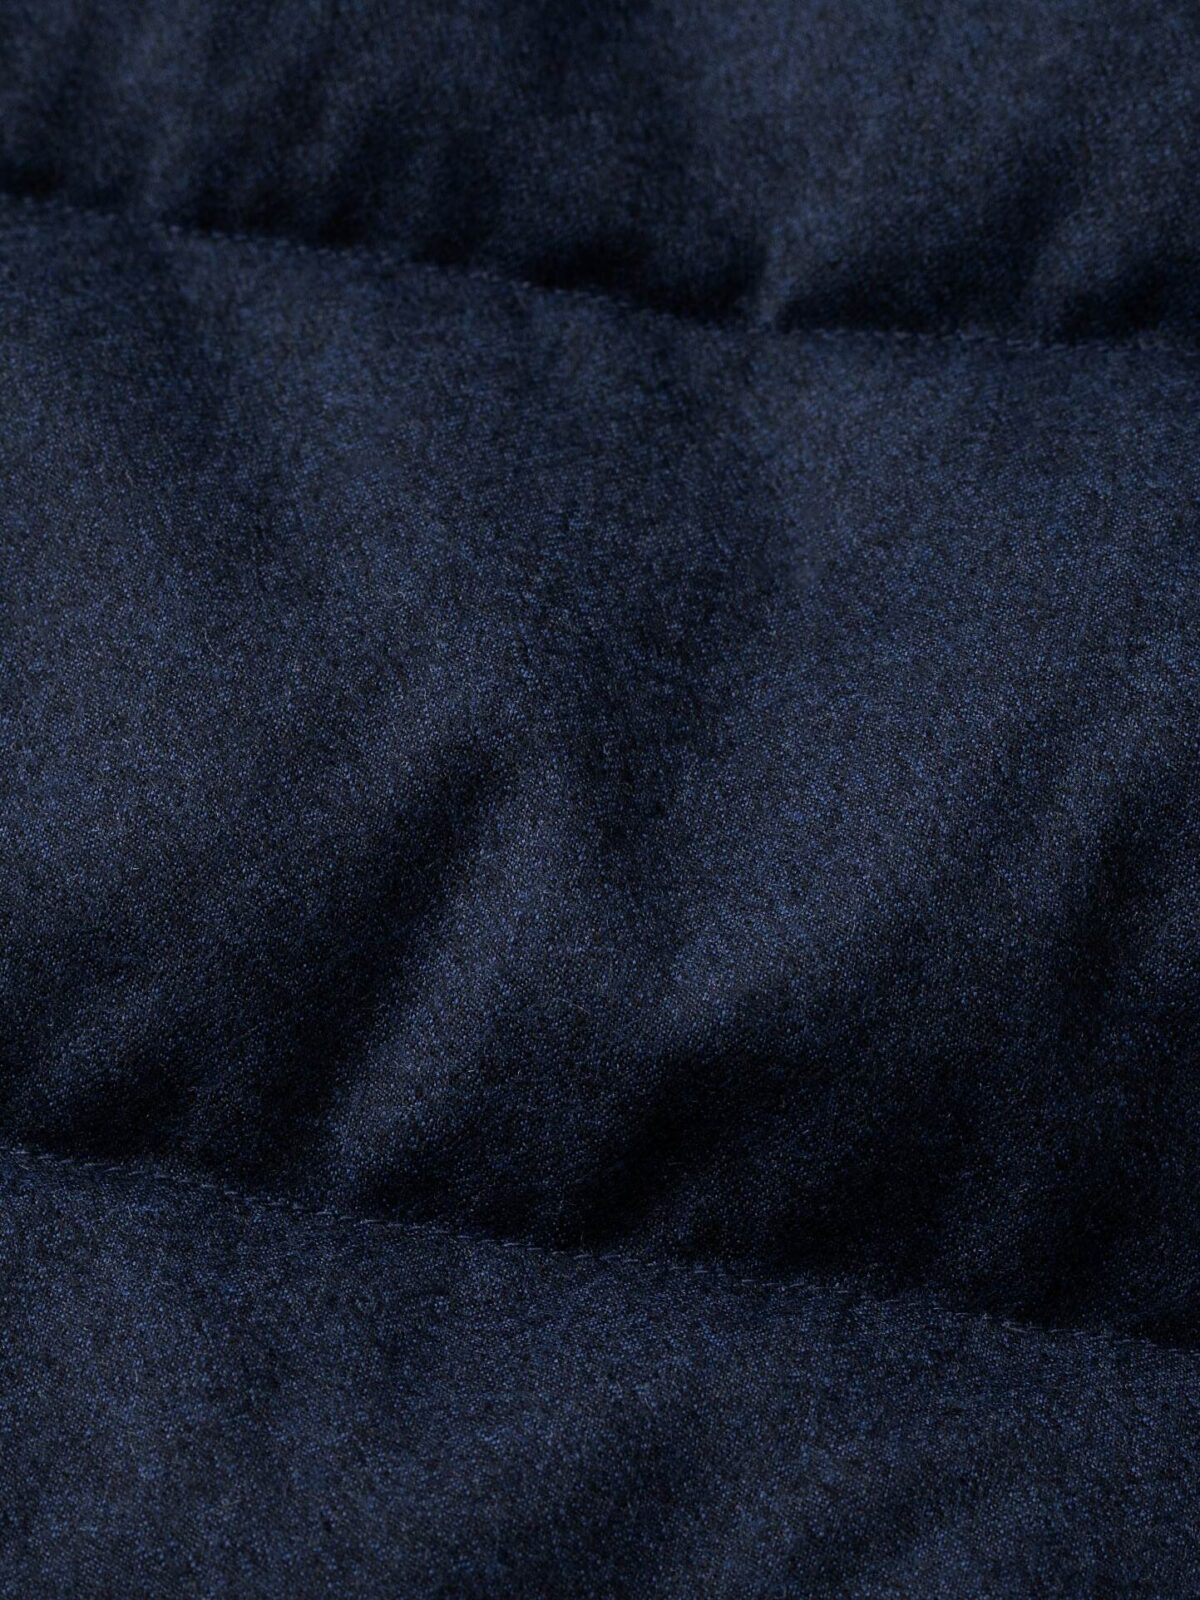 Cortina II Dark Slate Blue Flannel Snap Vest